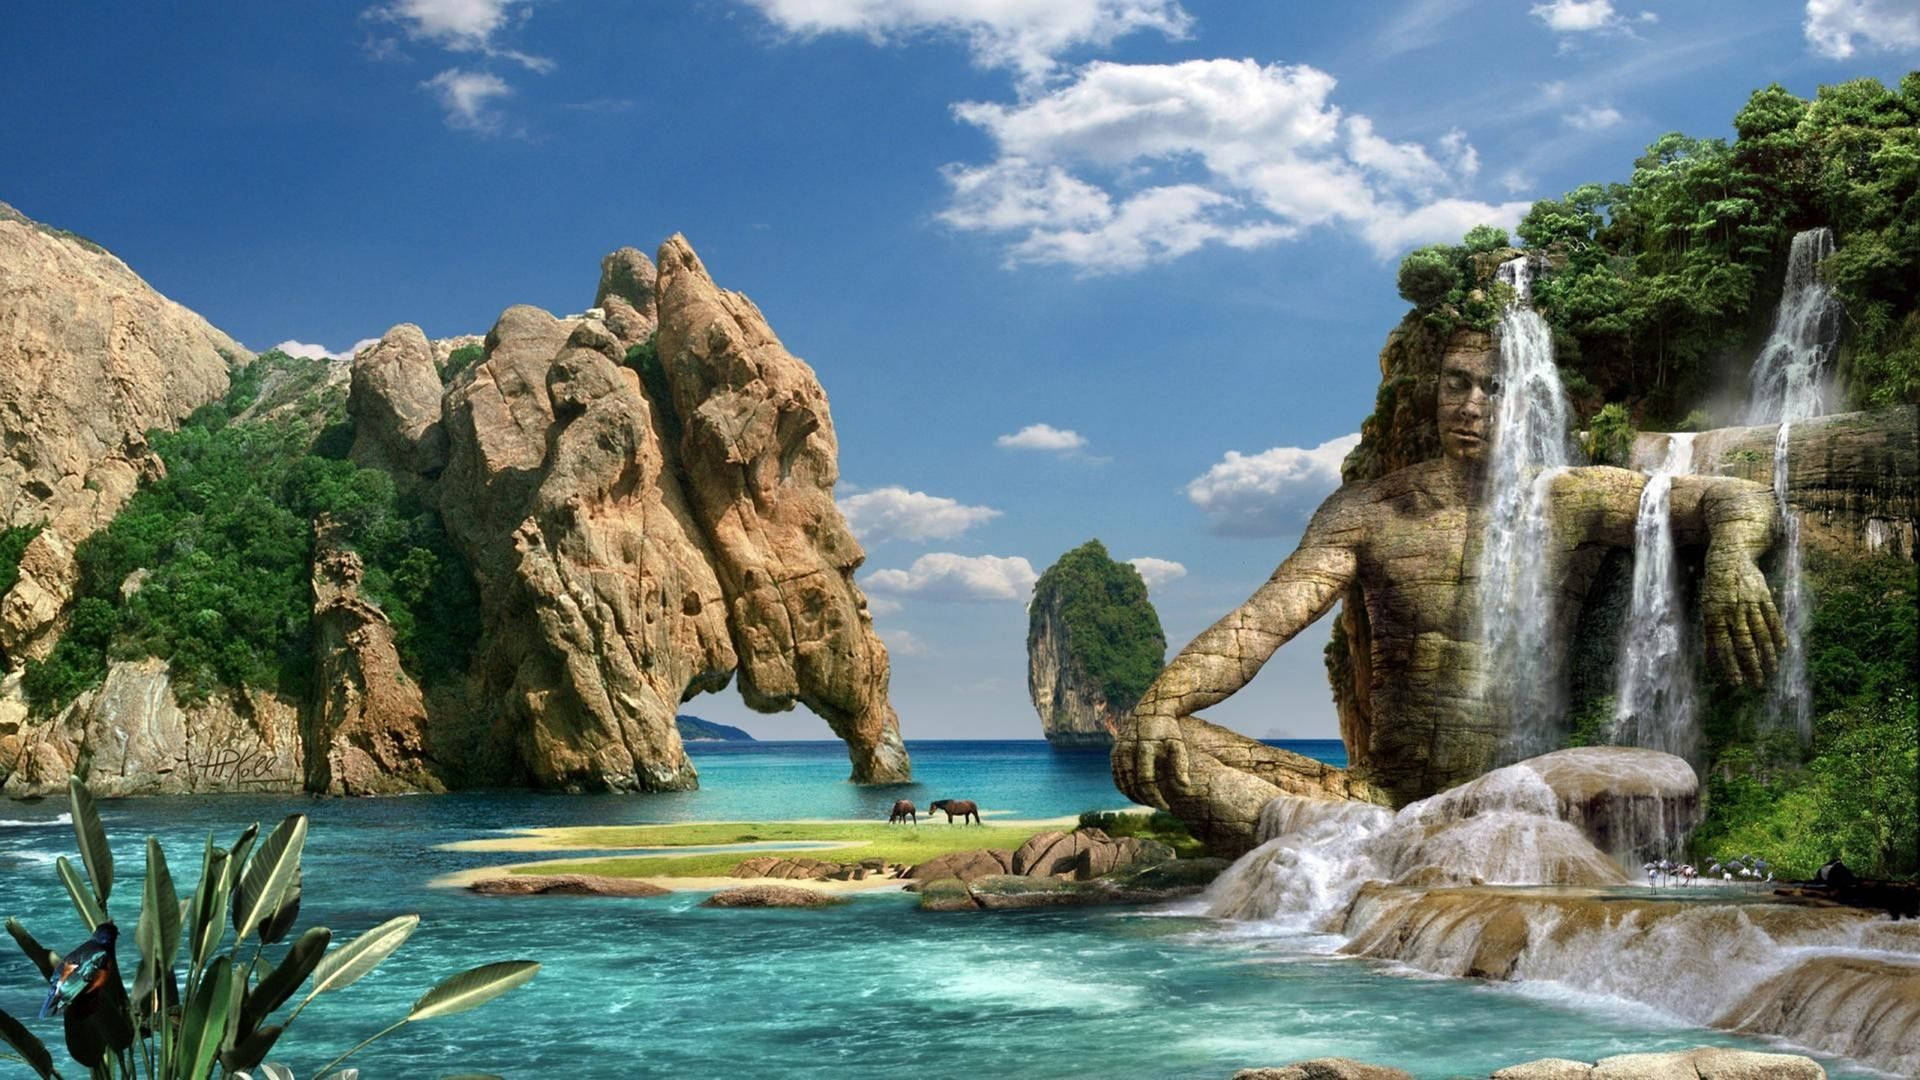 Majestic Elephant Rock and Waterfall in Full HD Wallpaper